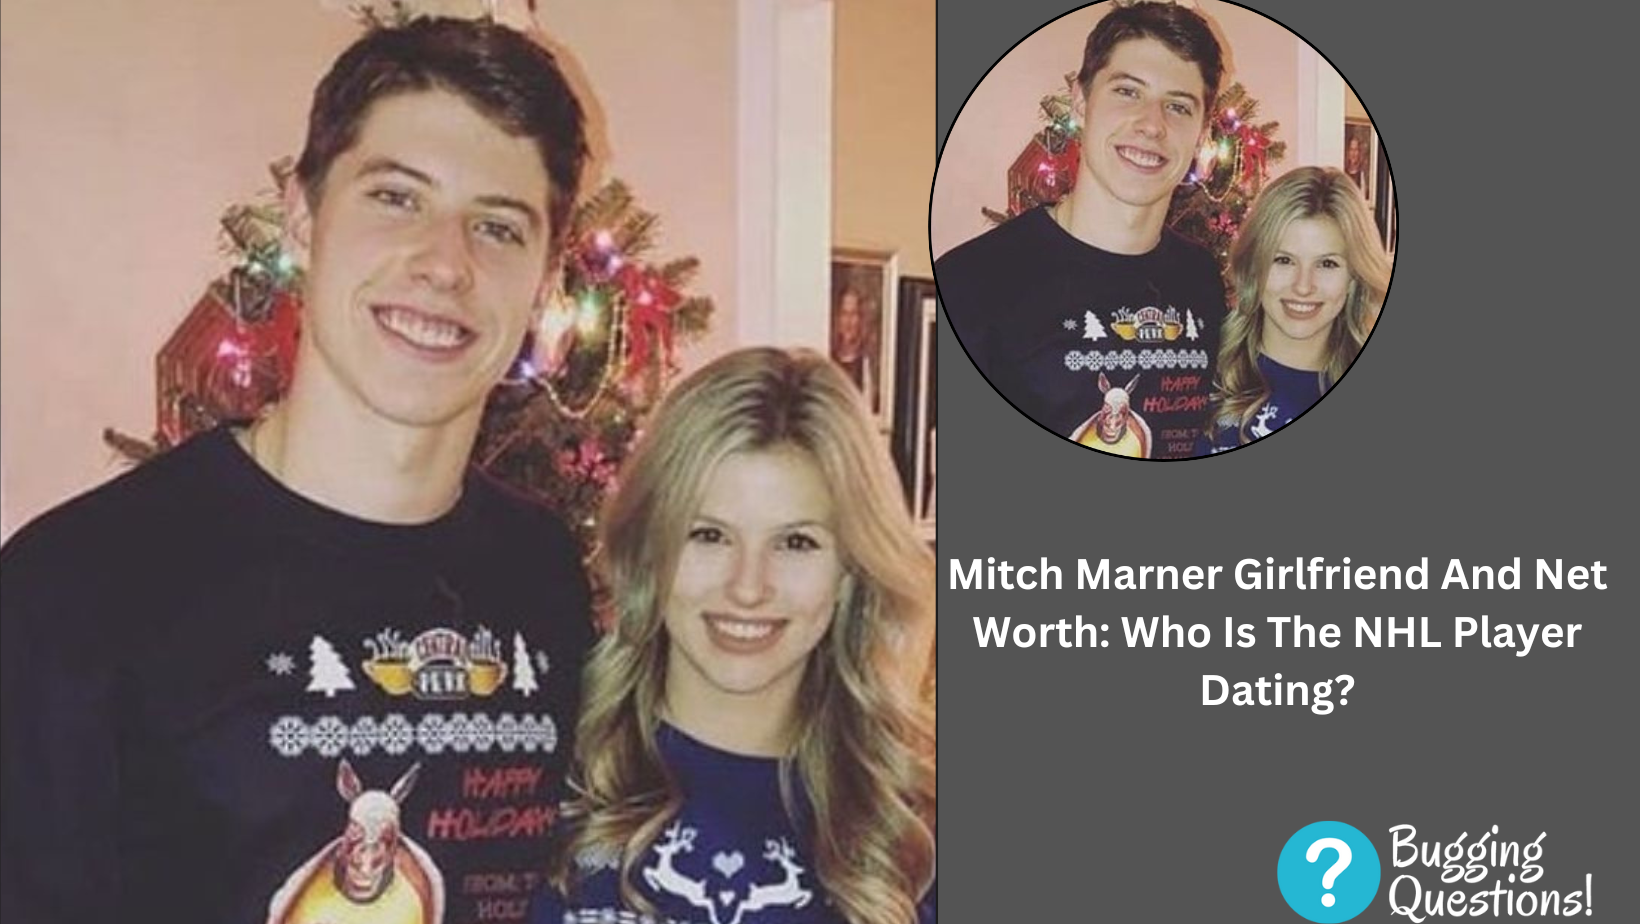 Mitch Marner Girlfriend And Net Worth